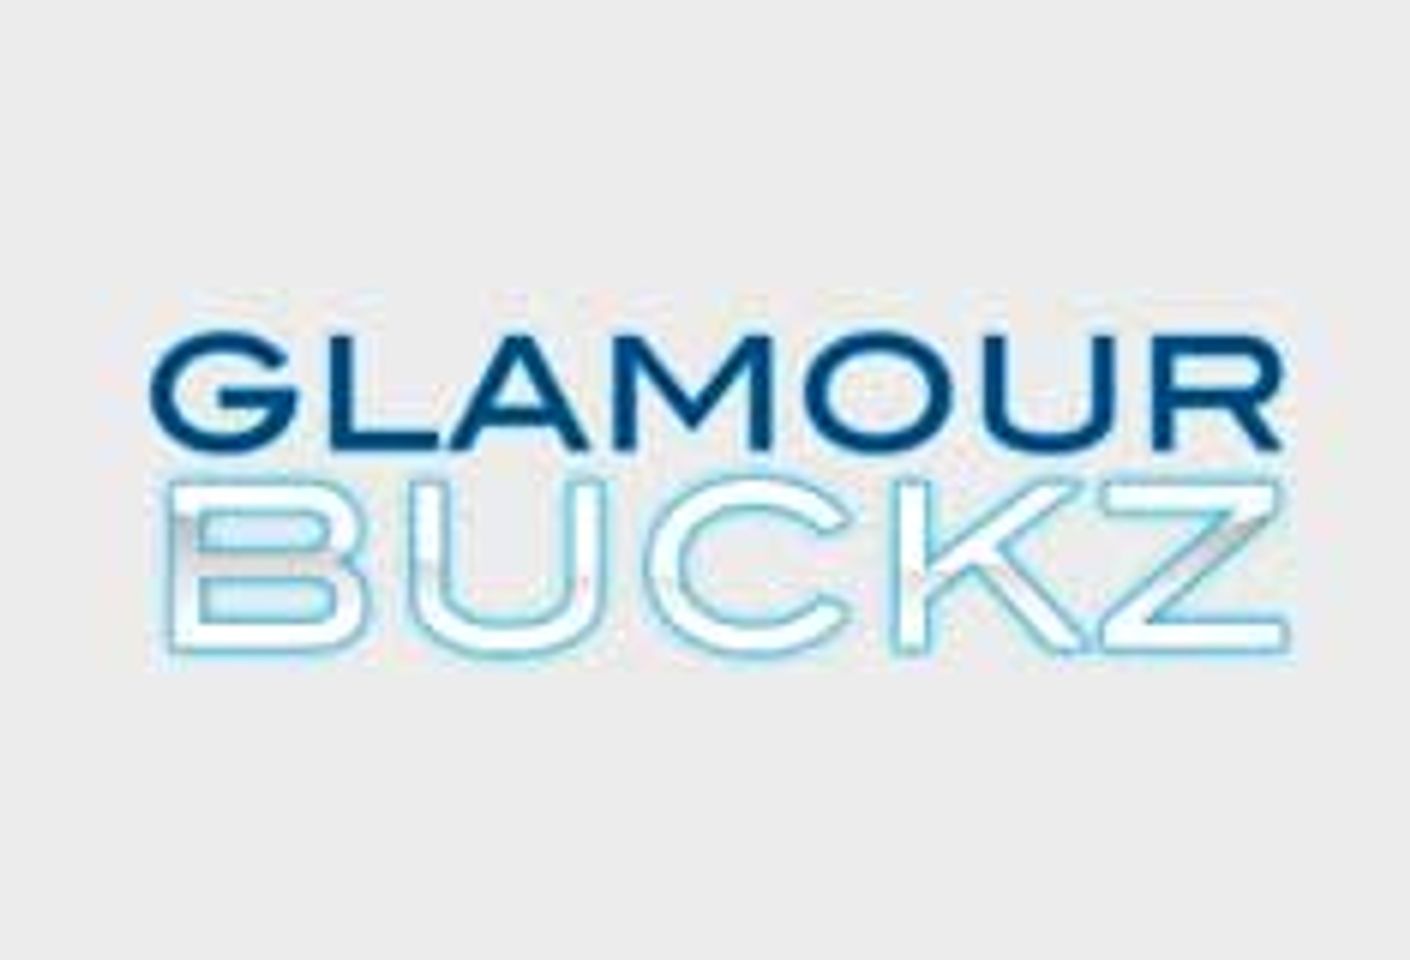 Glamourbuckz Integrates SoloBuckz Affiliate Program